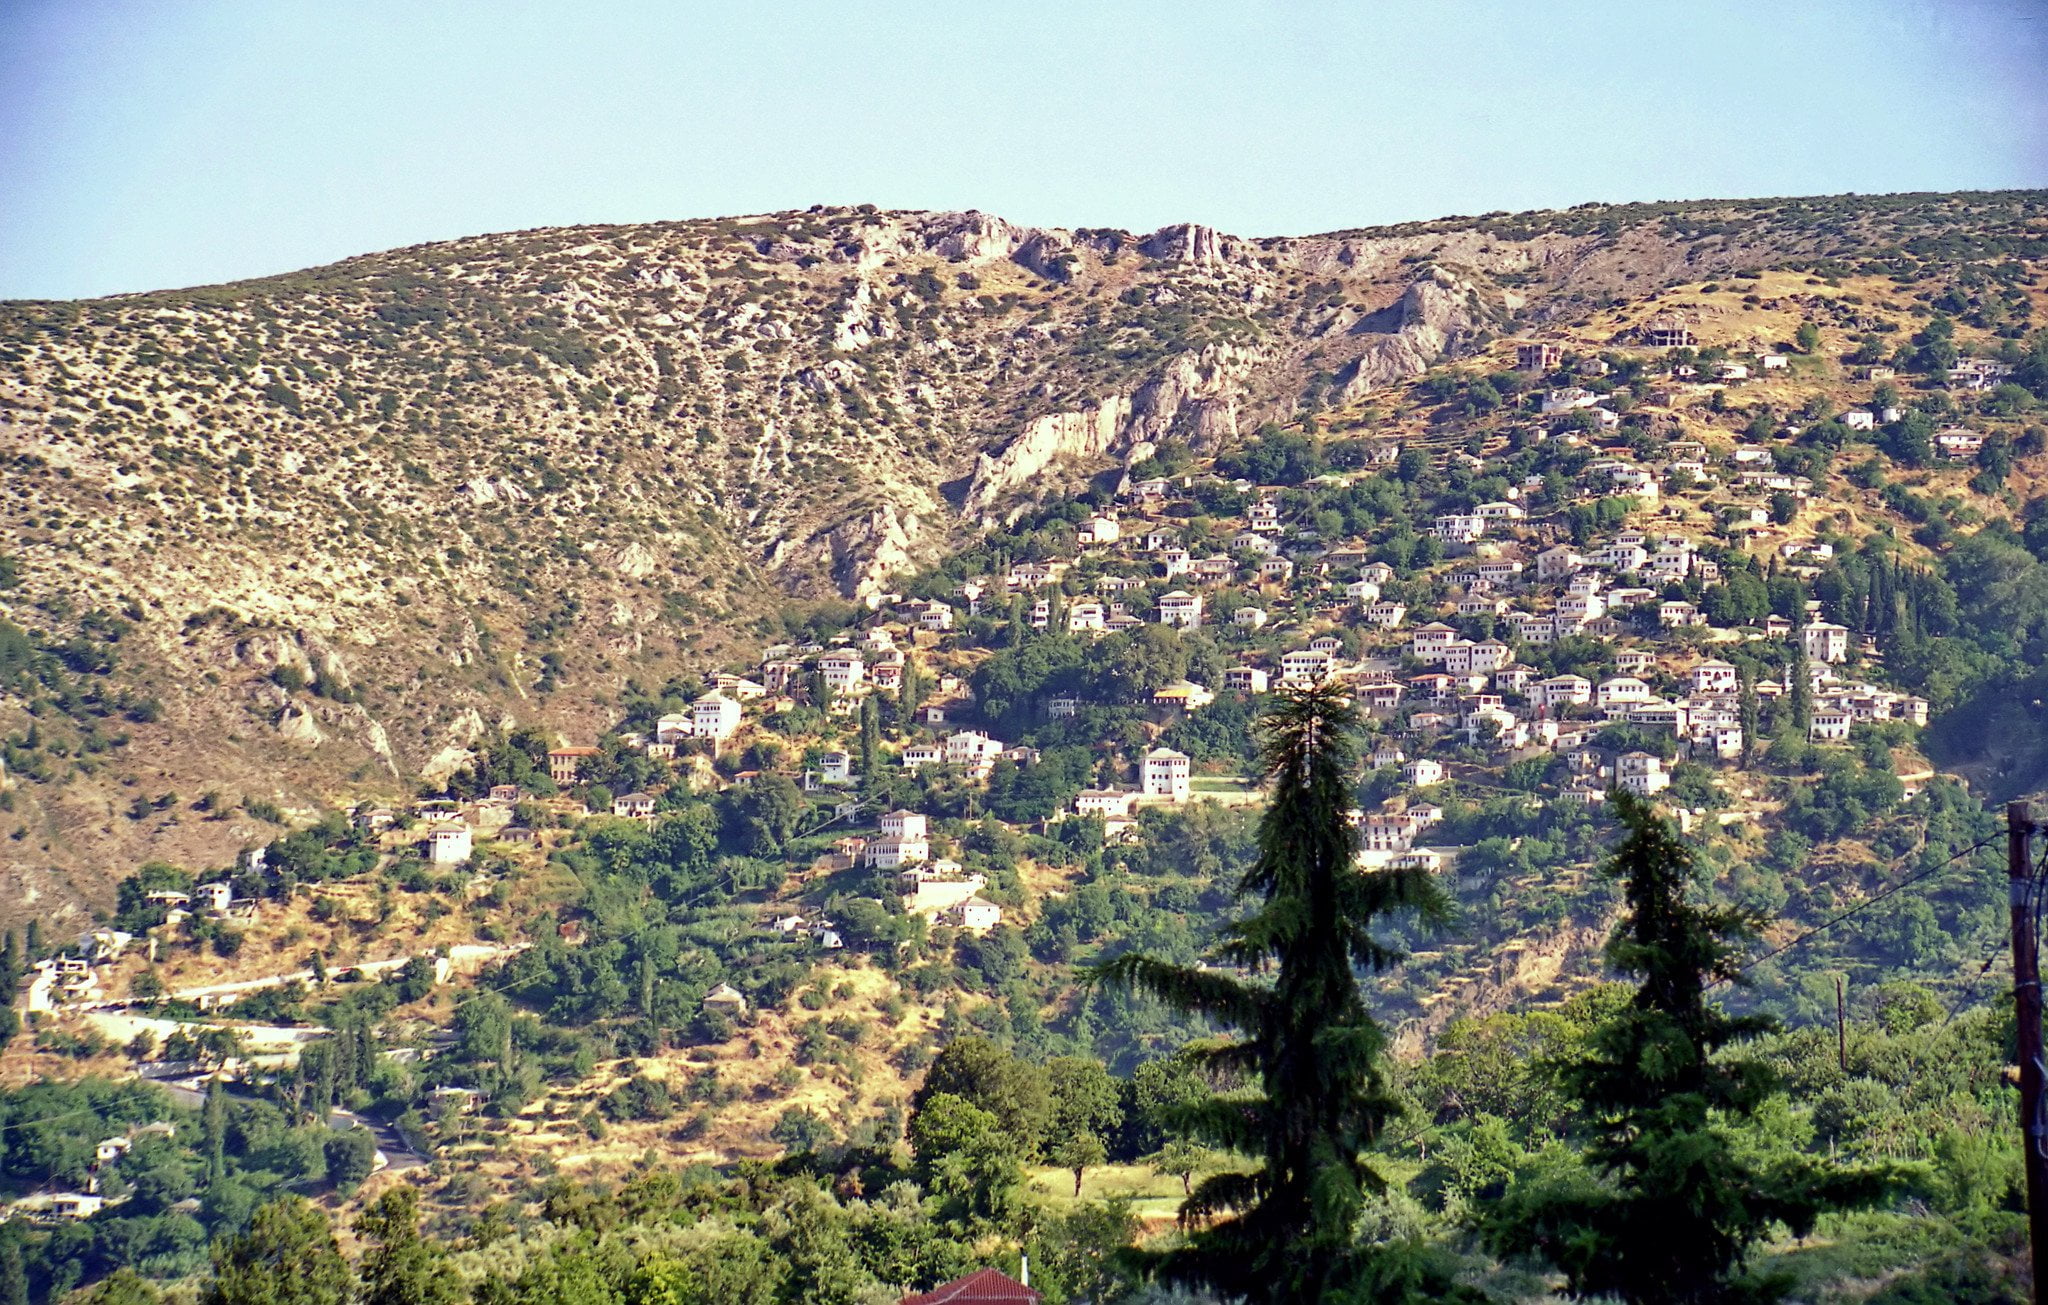 Portaria village in Pelion